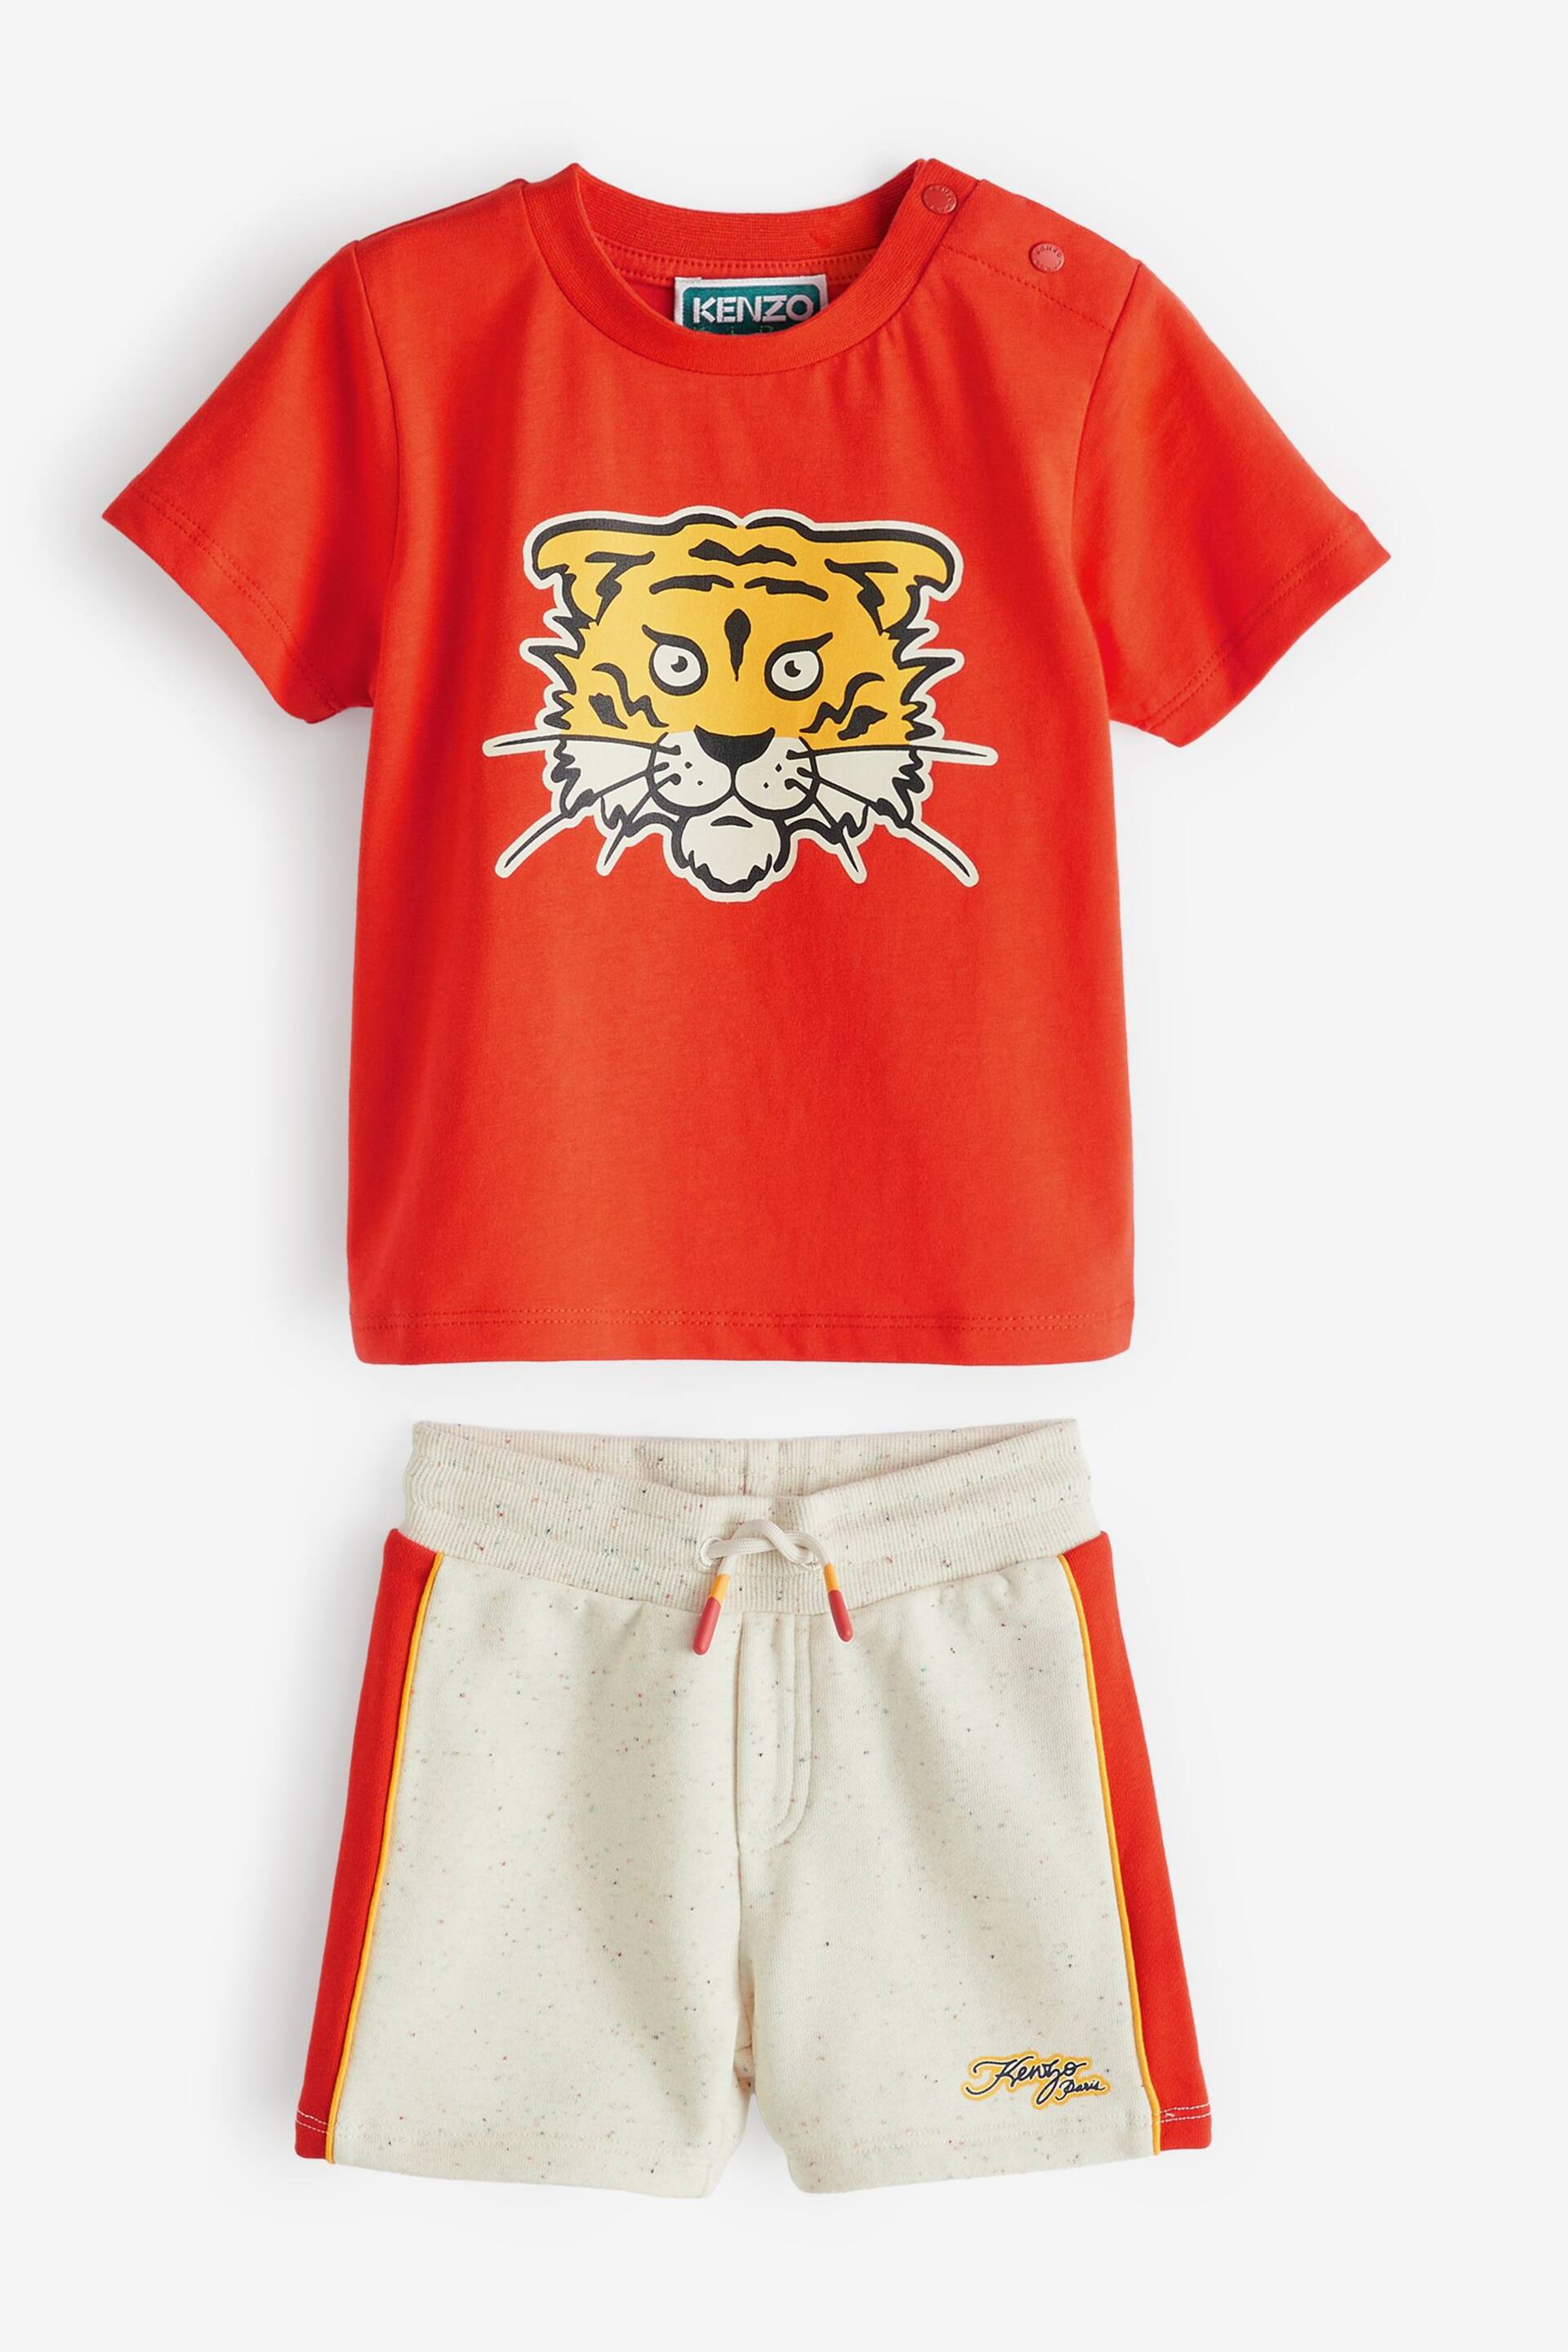 KENZO KIDS Baby Red Tiger Varisty Logo Print Short Sleeve Top and Shorts Set - Image 1 of 5